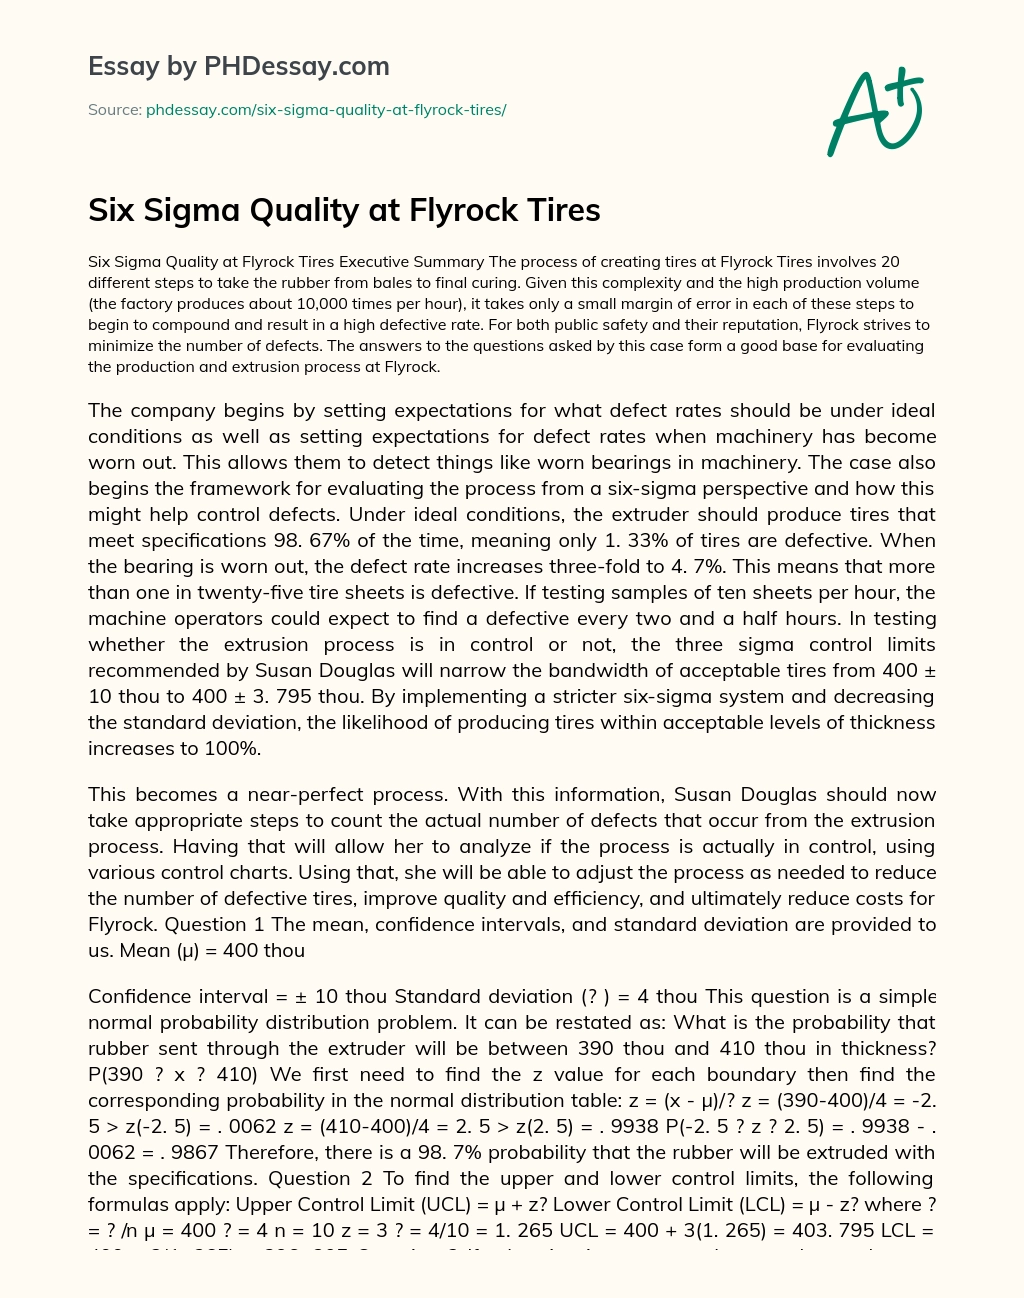 Six Sigma Quality at Flyrock Tires essay